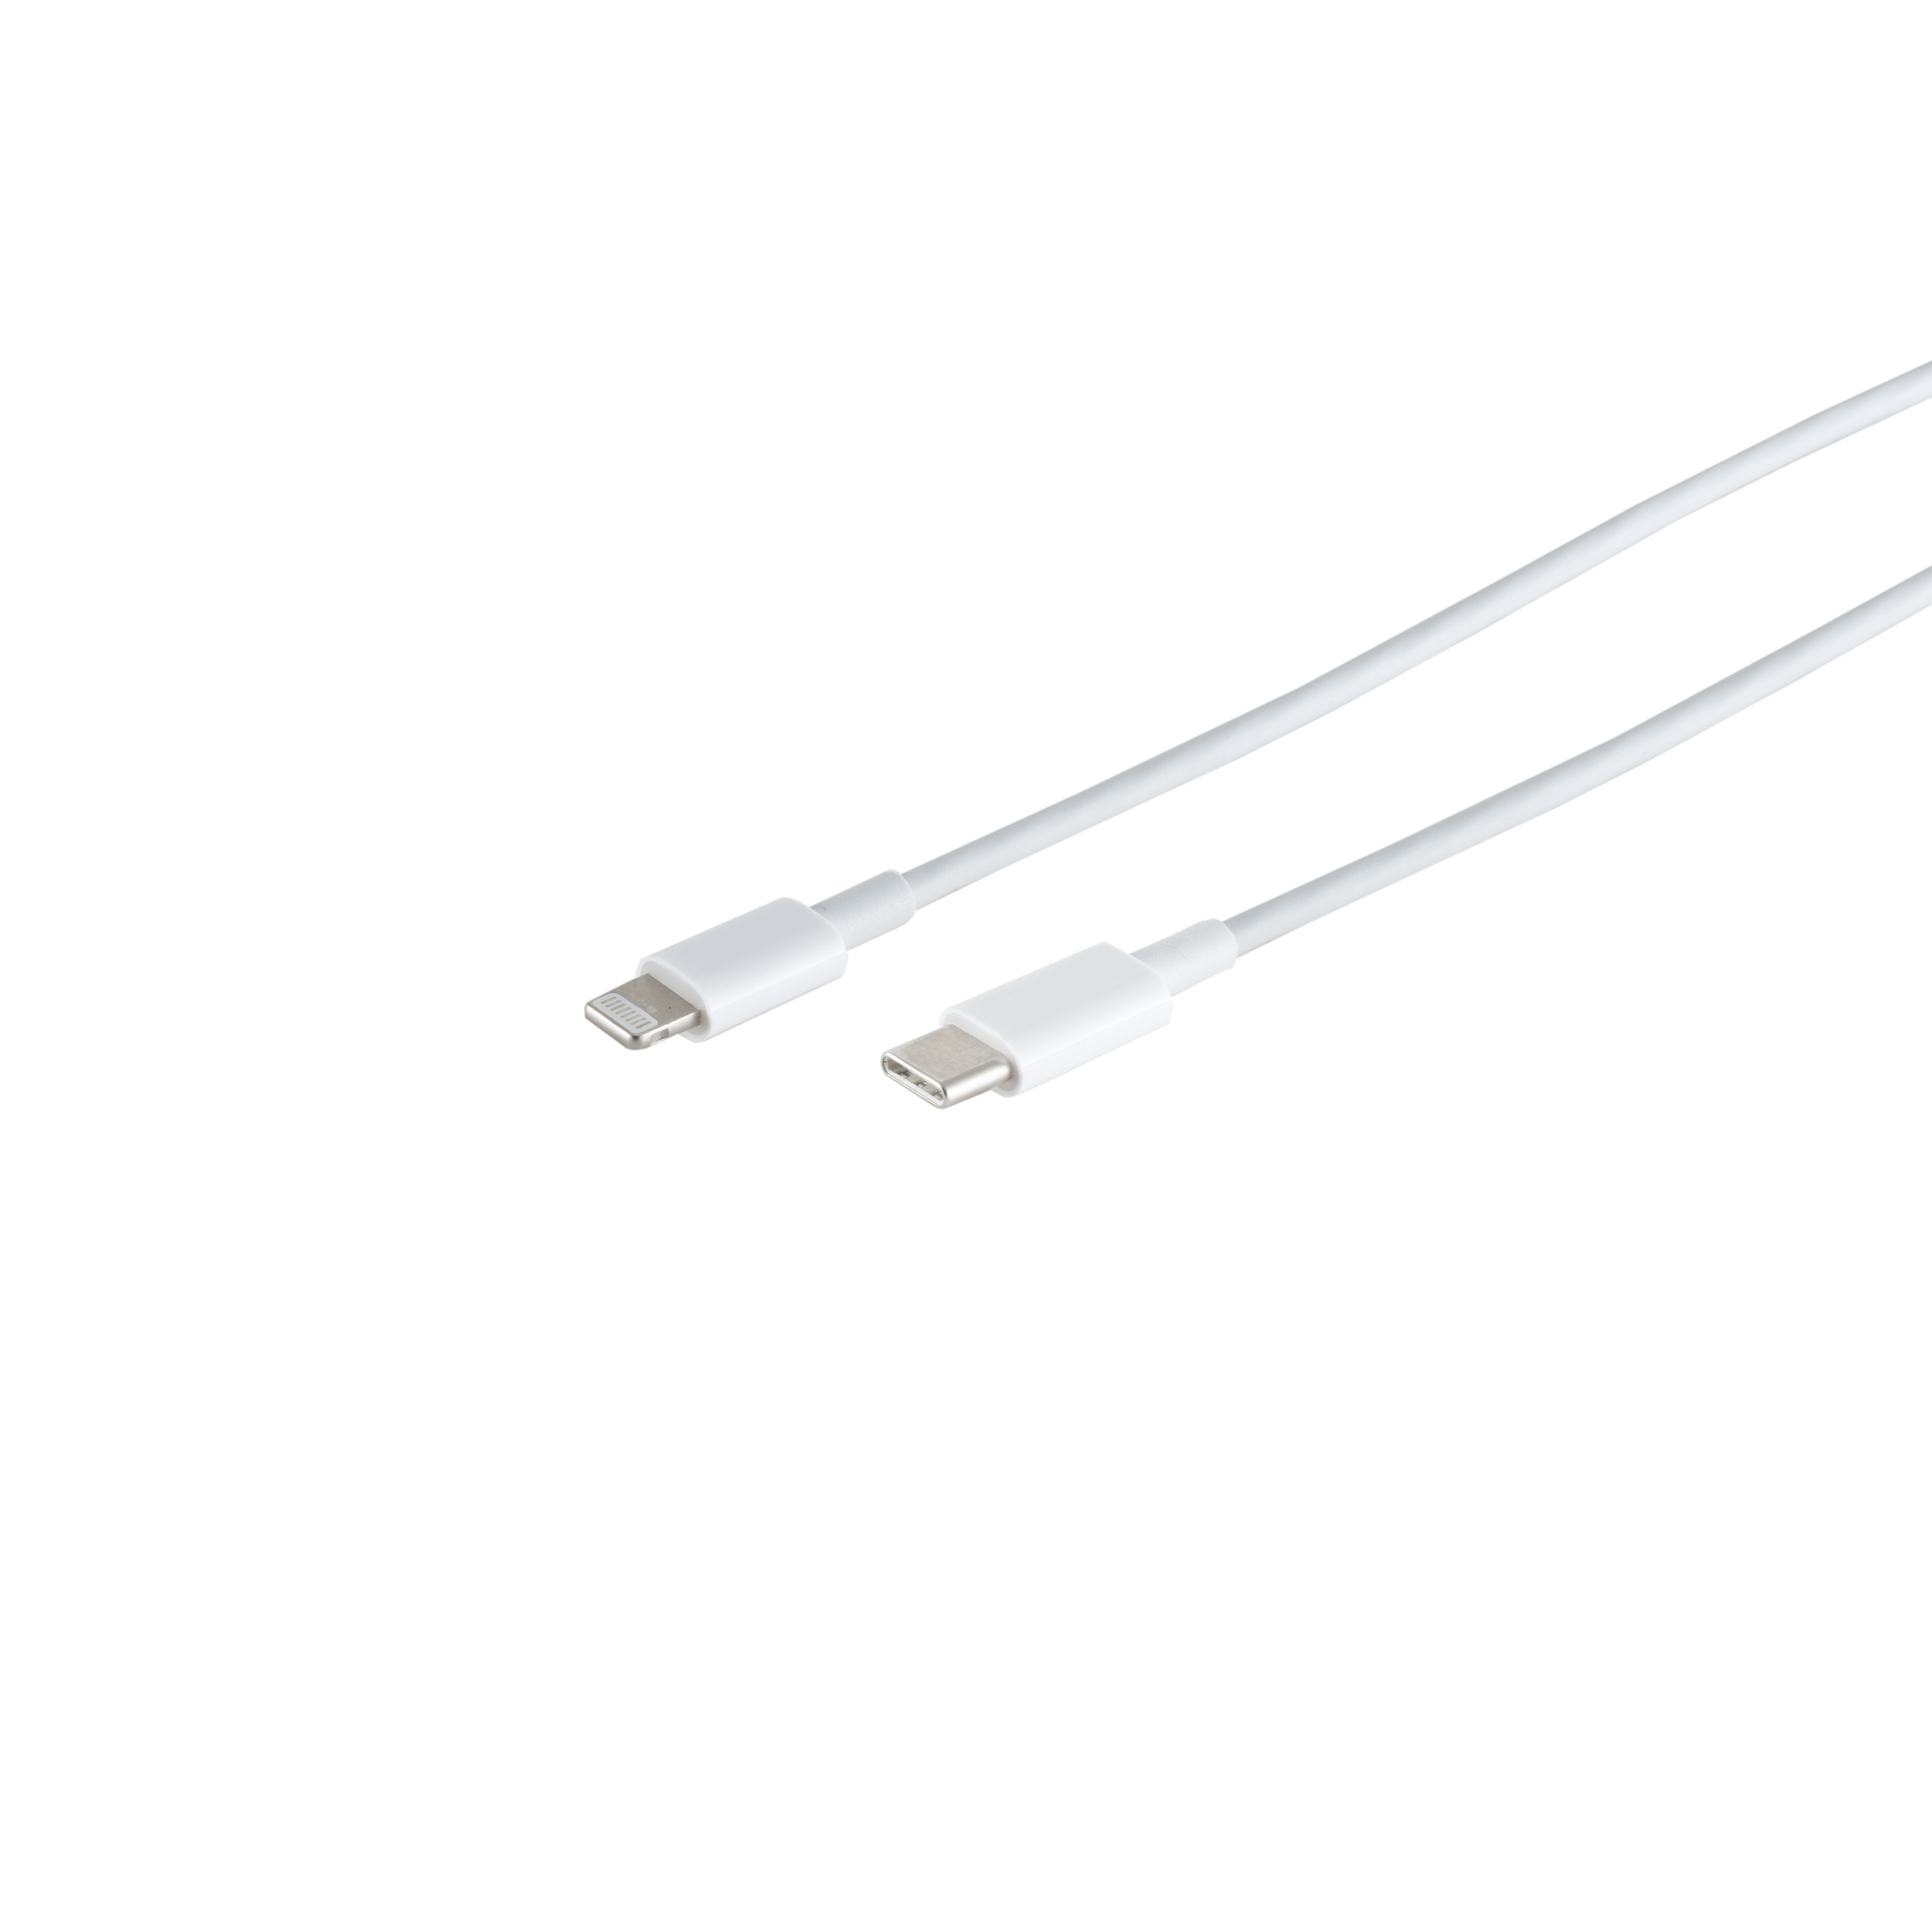 S/CONN Stecker USB-C® 8-pin Lade USB auf 0,5m Kabel MAXIMUM Kabel, Stecker, CONNECTIVITY